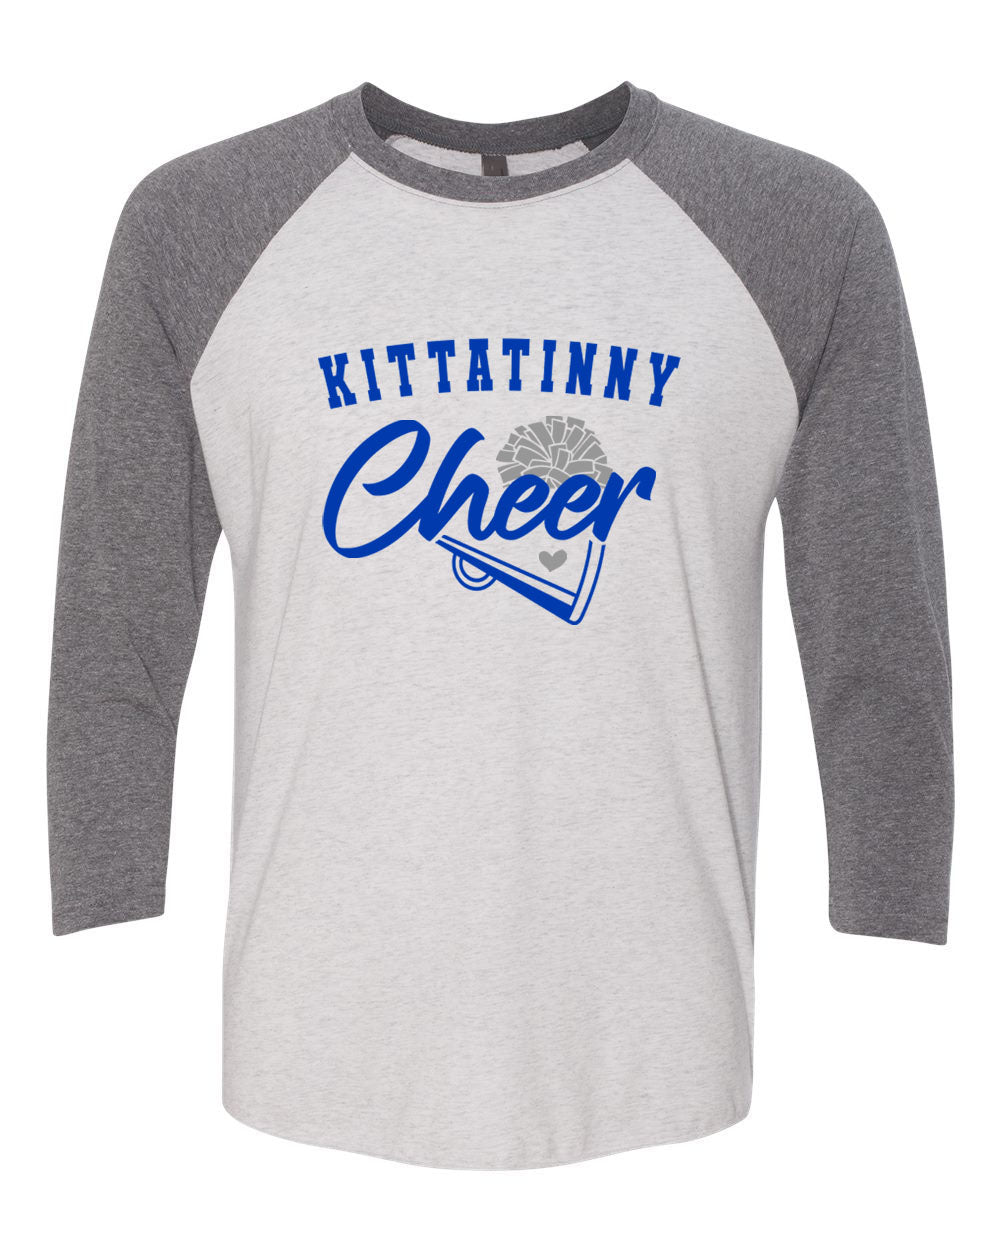 Kittatinny Cheer Design 9 raglan shirt